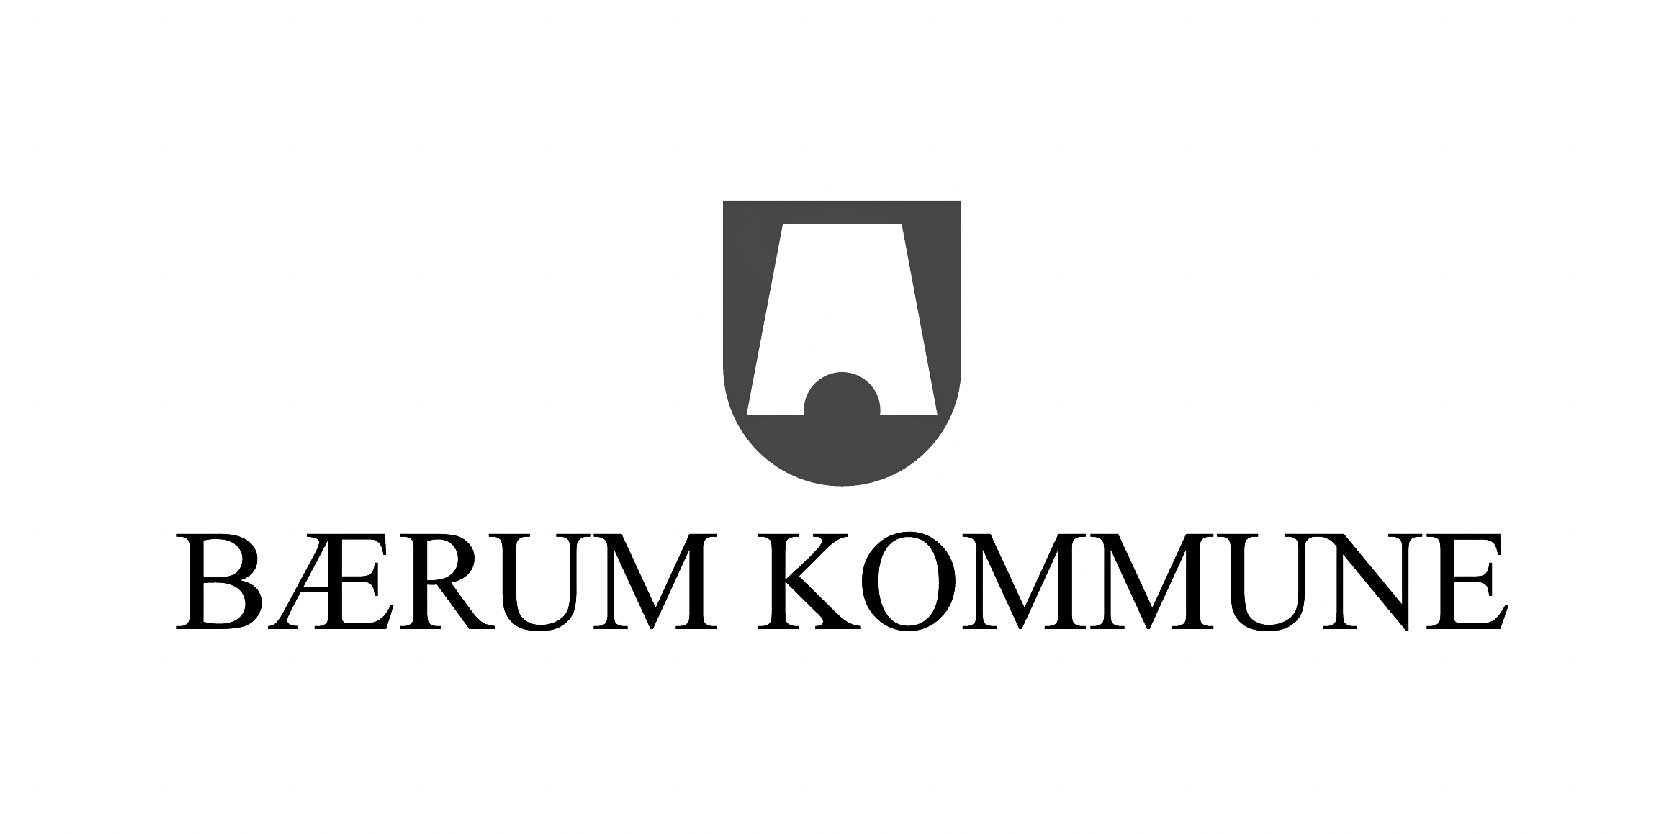 Bærum Kommune_edited